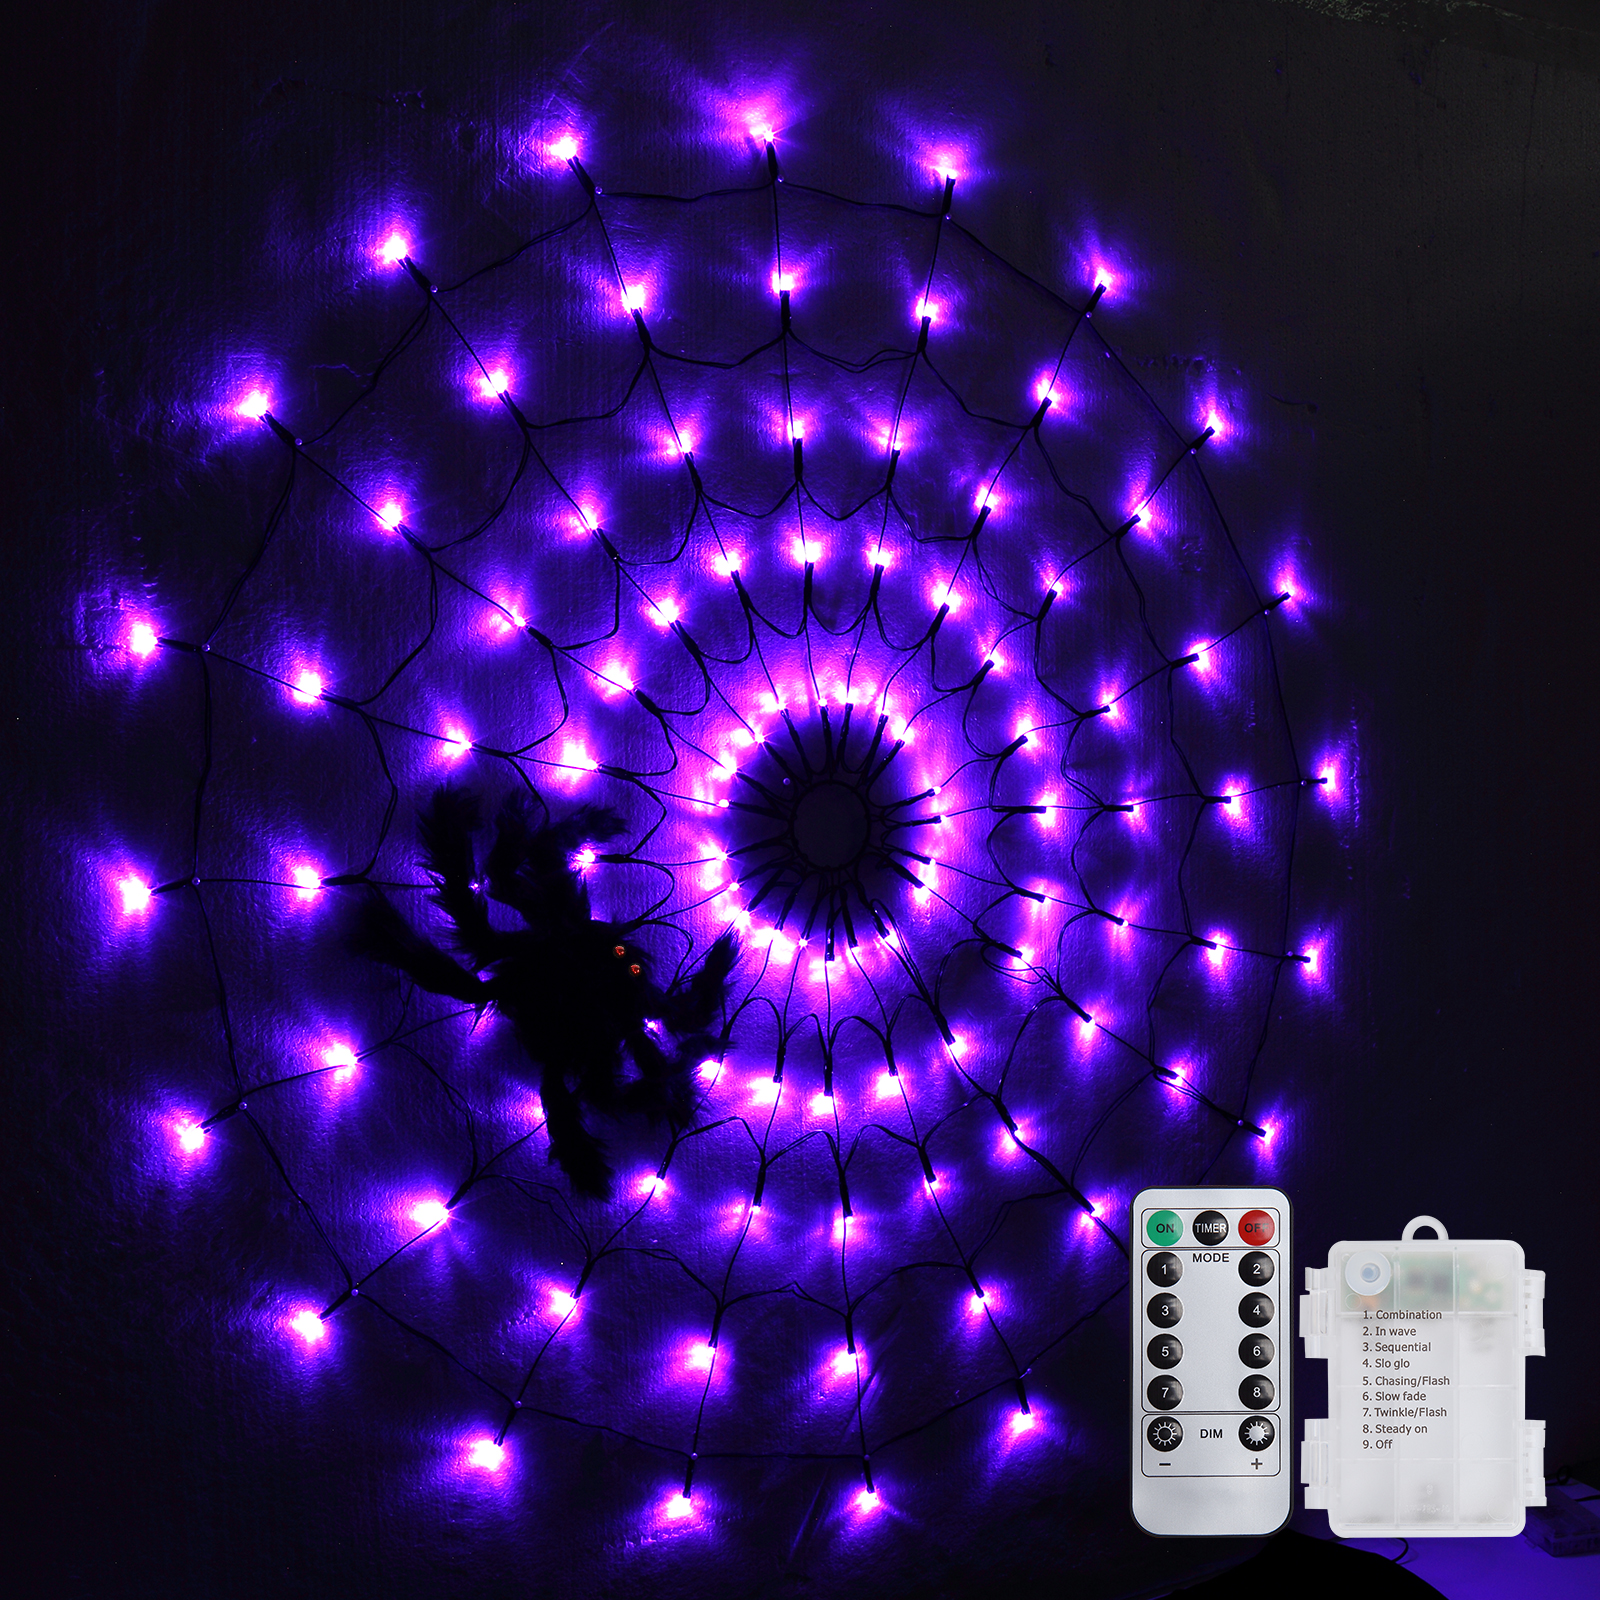 Sakiyr Halloween Spider Web Lights, 2.5FT Purple LED Spider Web with 8 Lighting Modes for Party Decoration - image 1 of 8